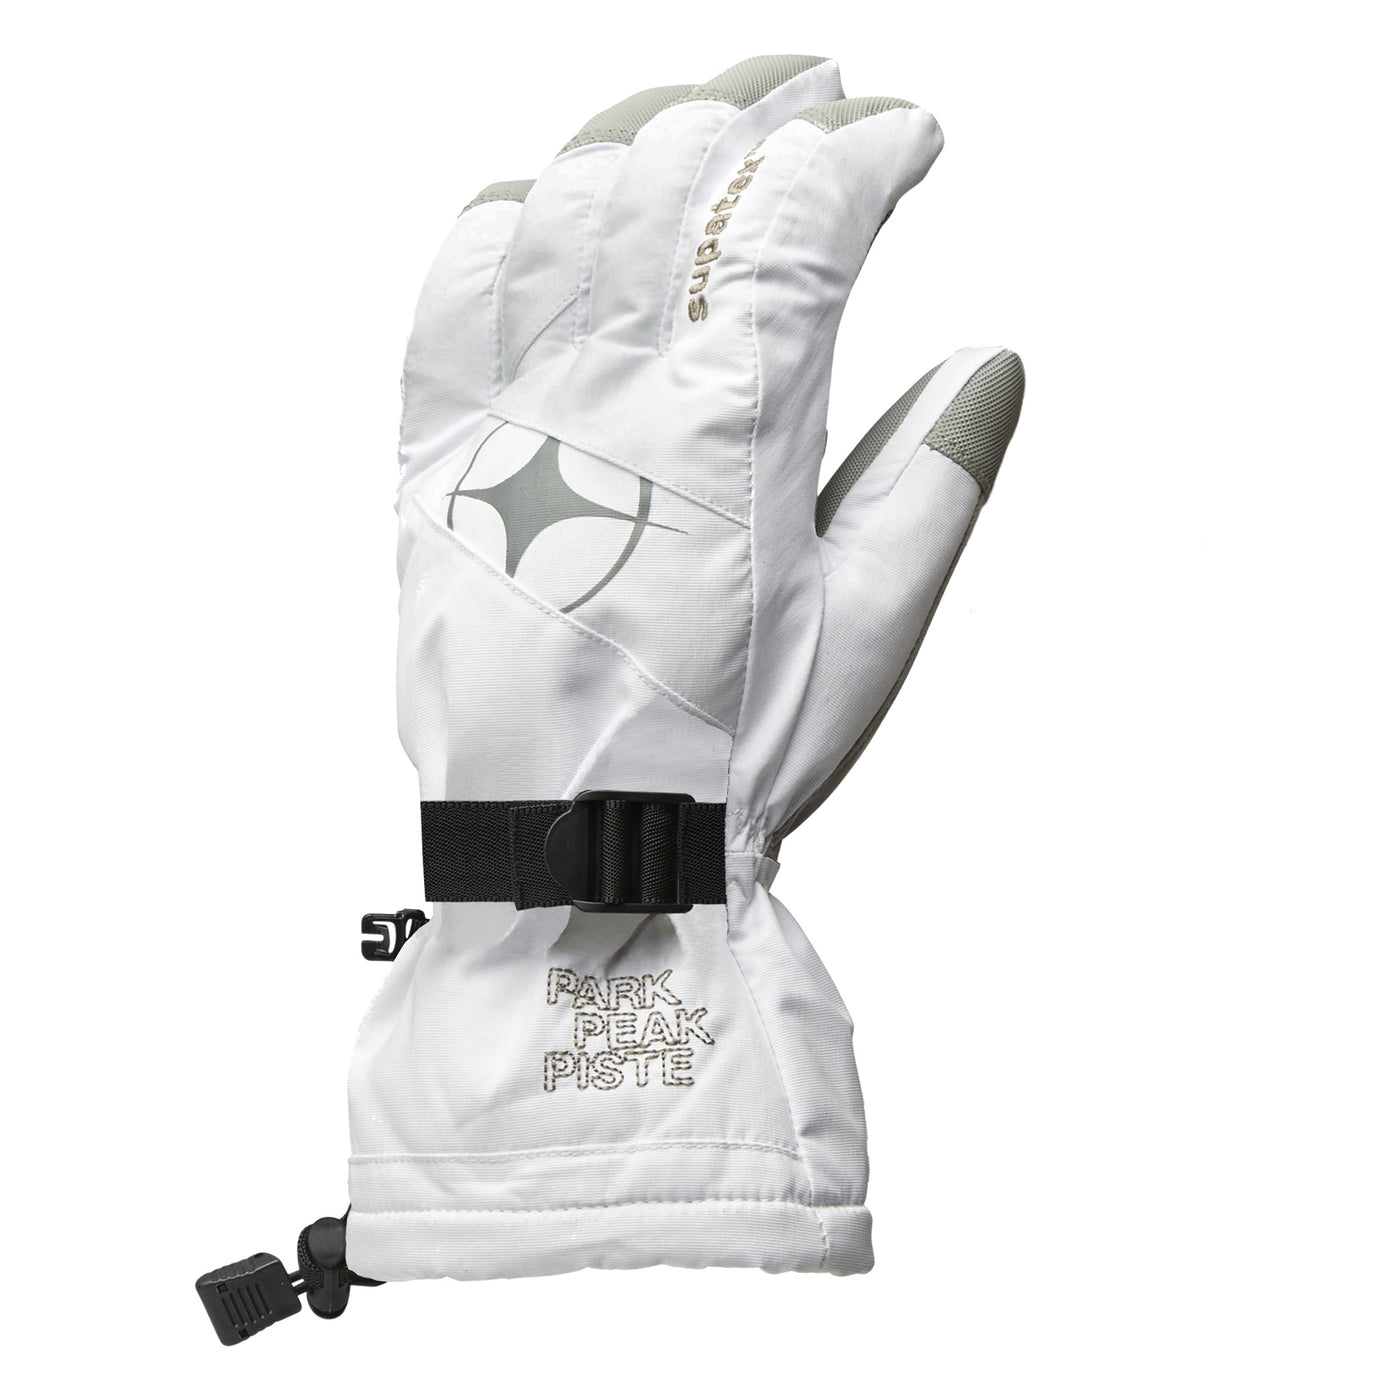 Manbi-PPP Kids Epic Glove White/Grey